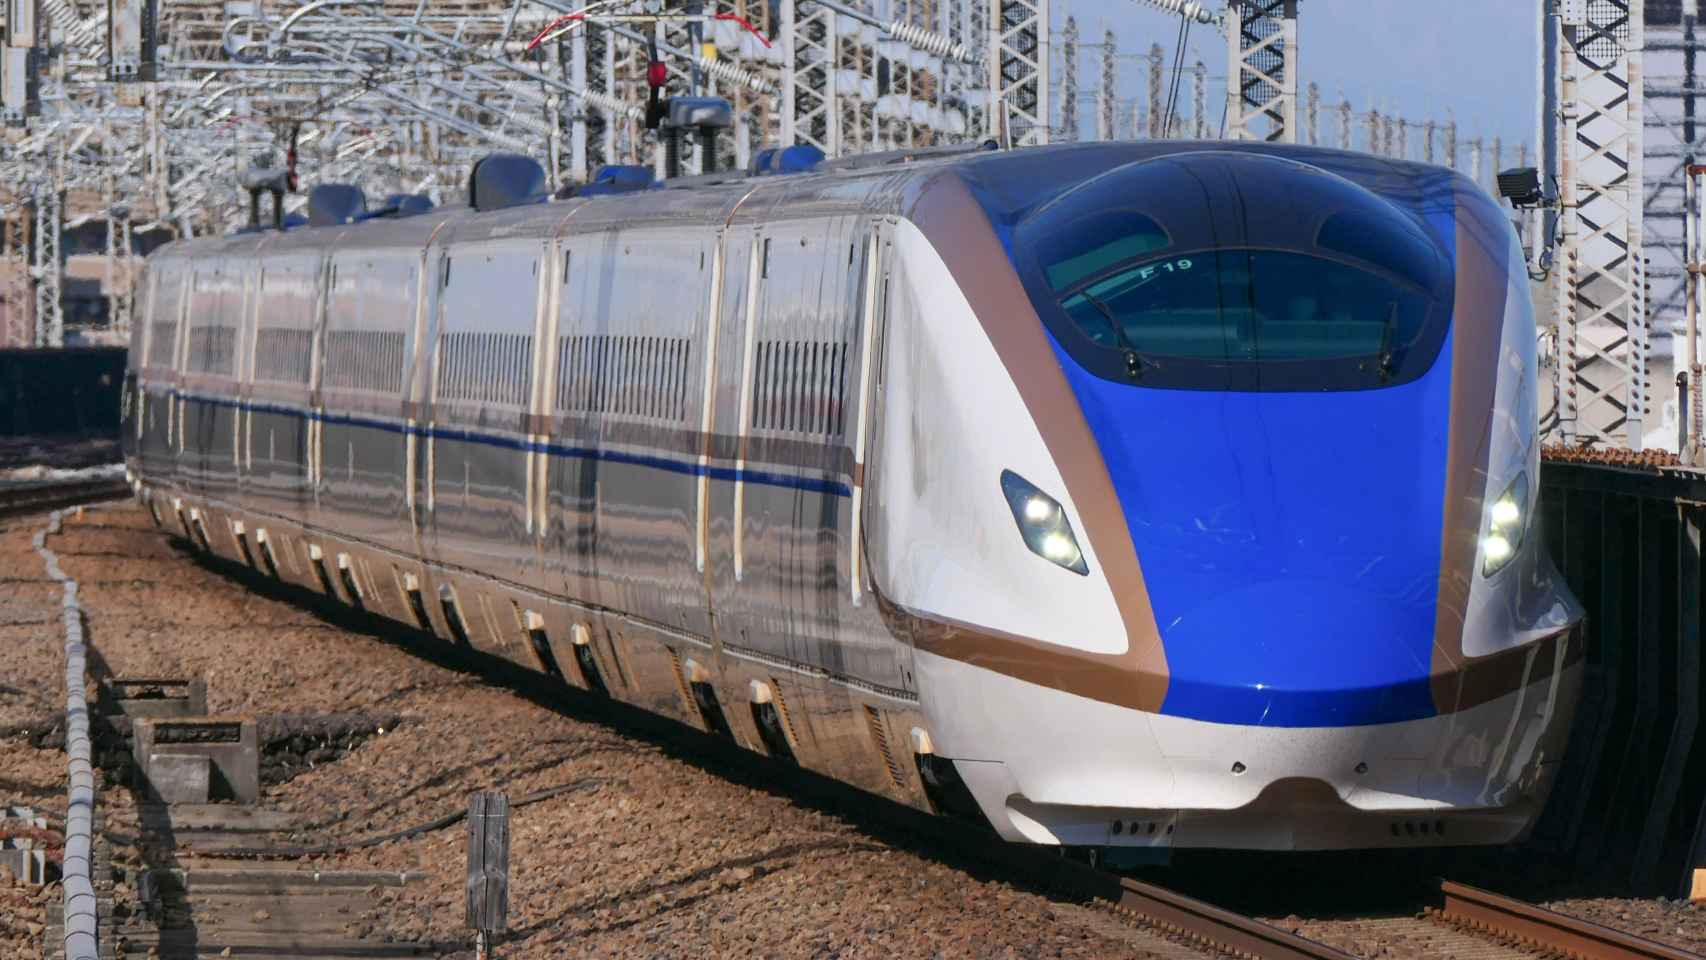 Series E7, mismo modelo de tren en ser operado sin maquinista en Japón